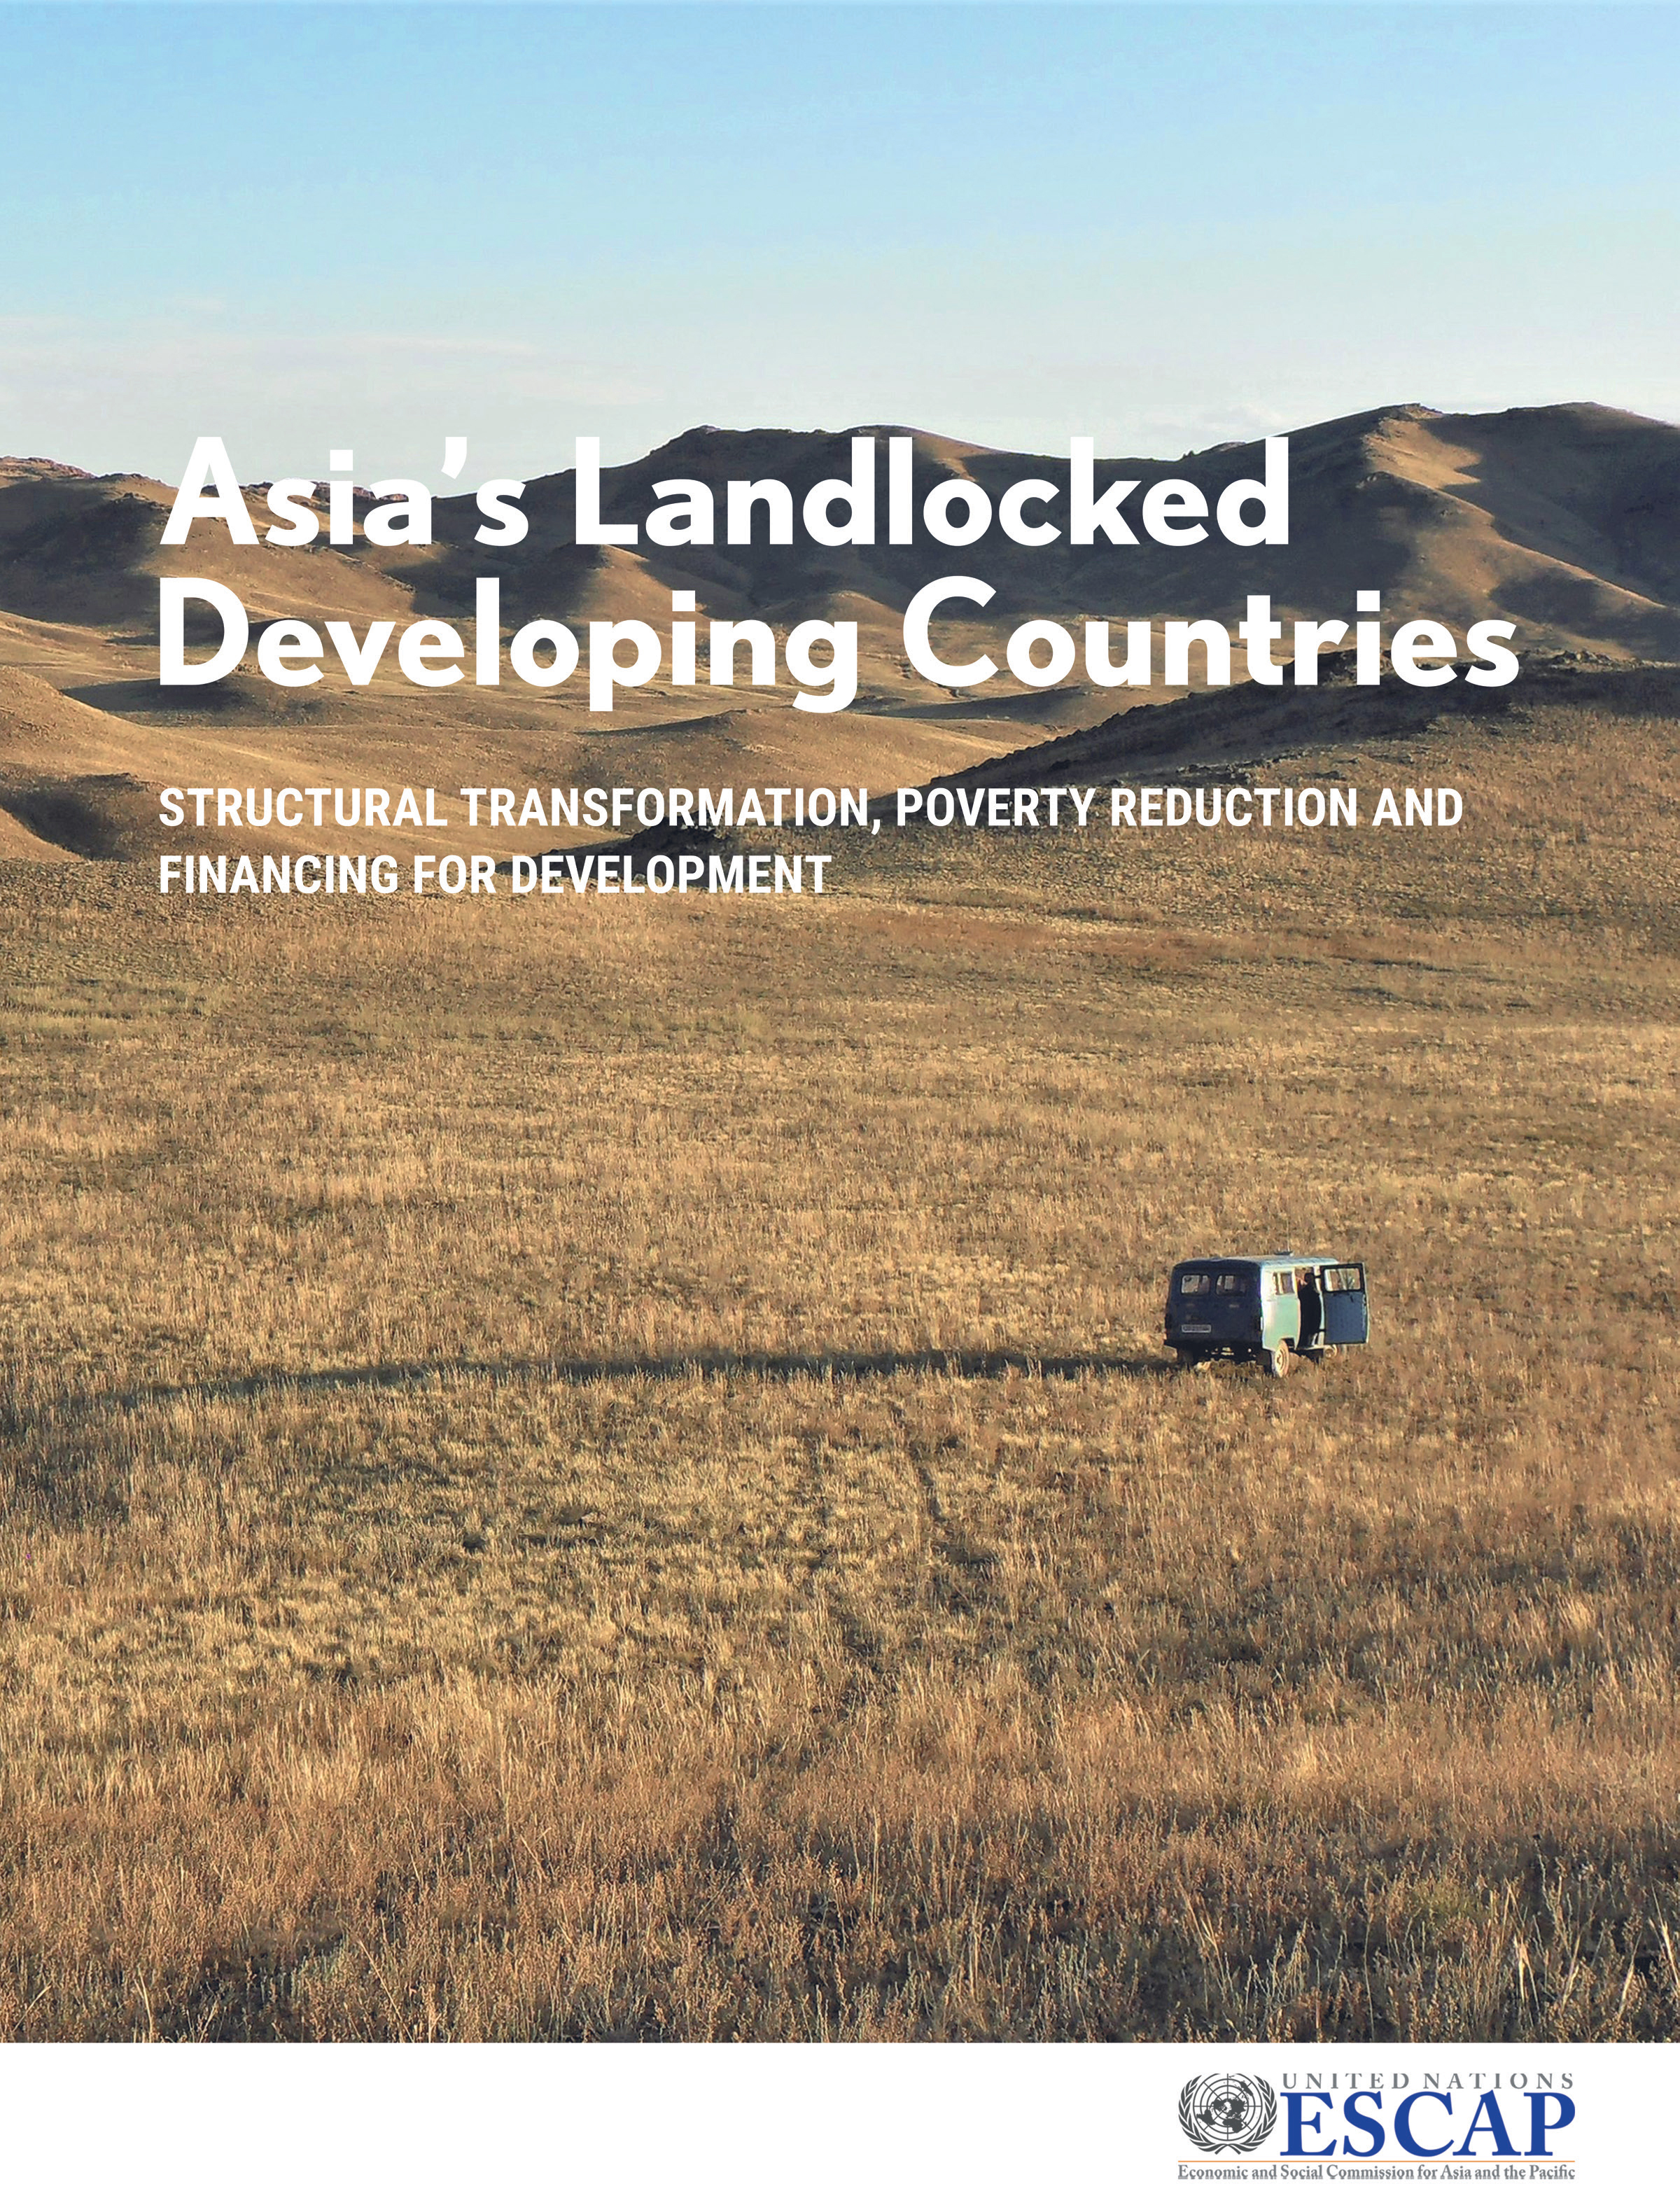 image of Asia's Landlocked Developing Countries